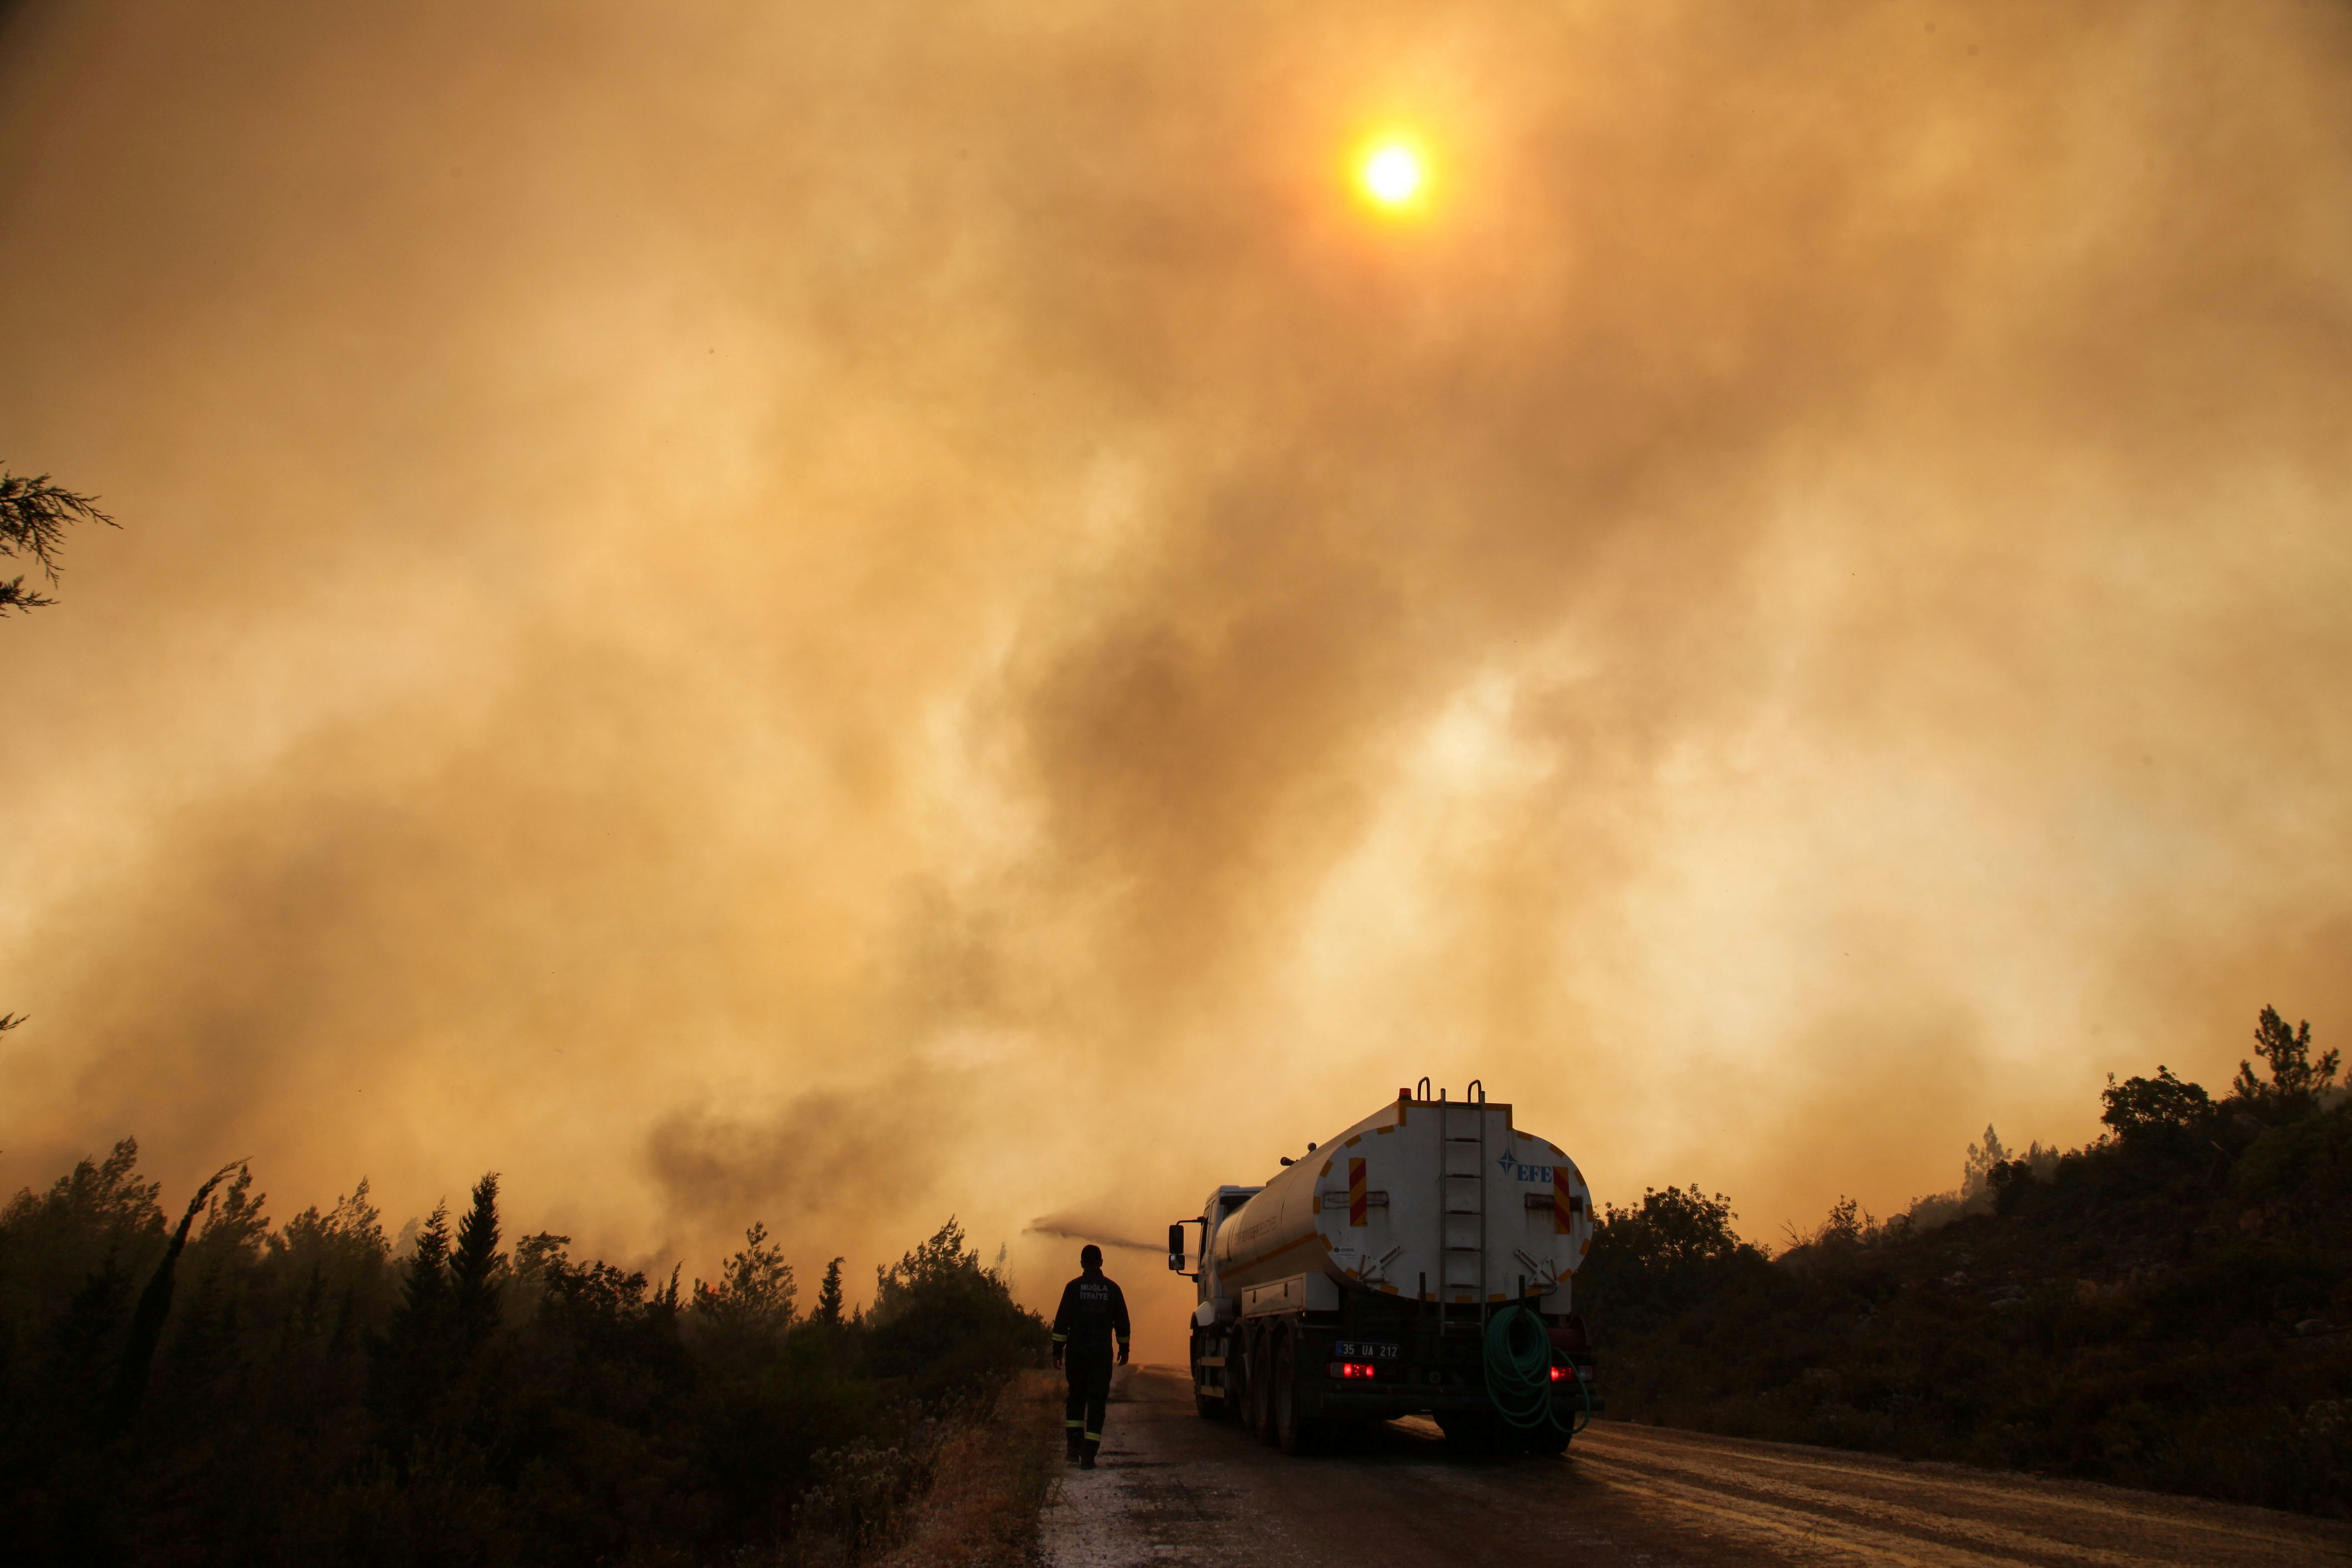 Firefighters extinguish a wildfire in the Mazi region near Bodrum, Turkey, August 2, 2021. REUTERS/Kenan Gurbuz  